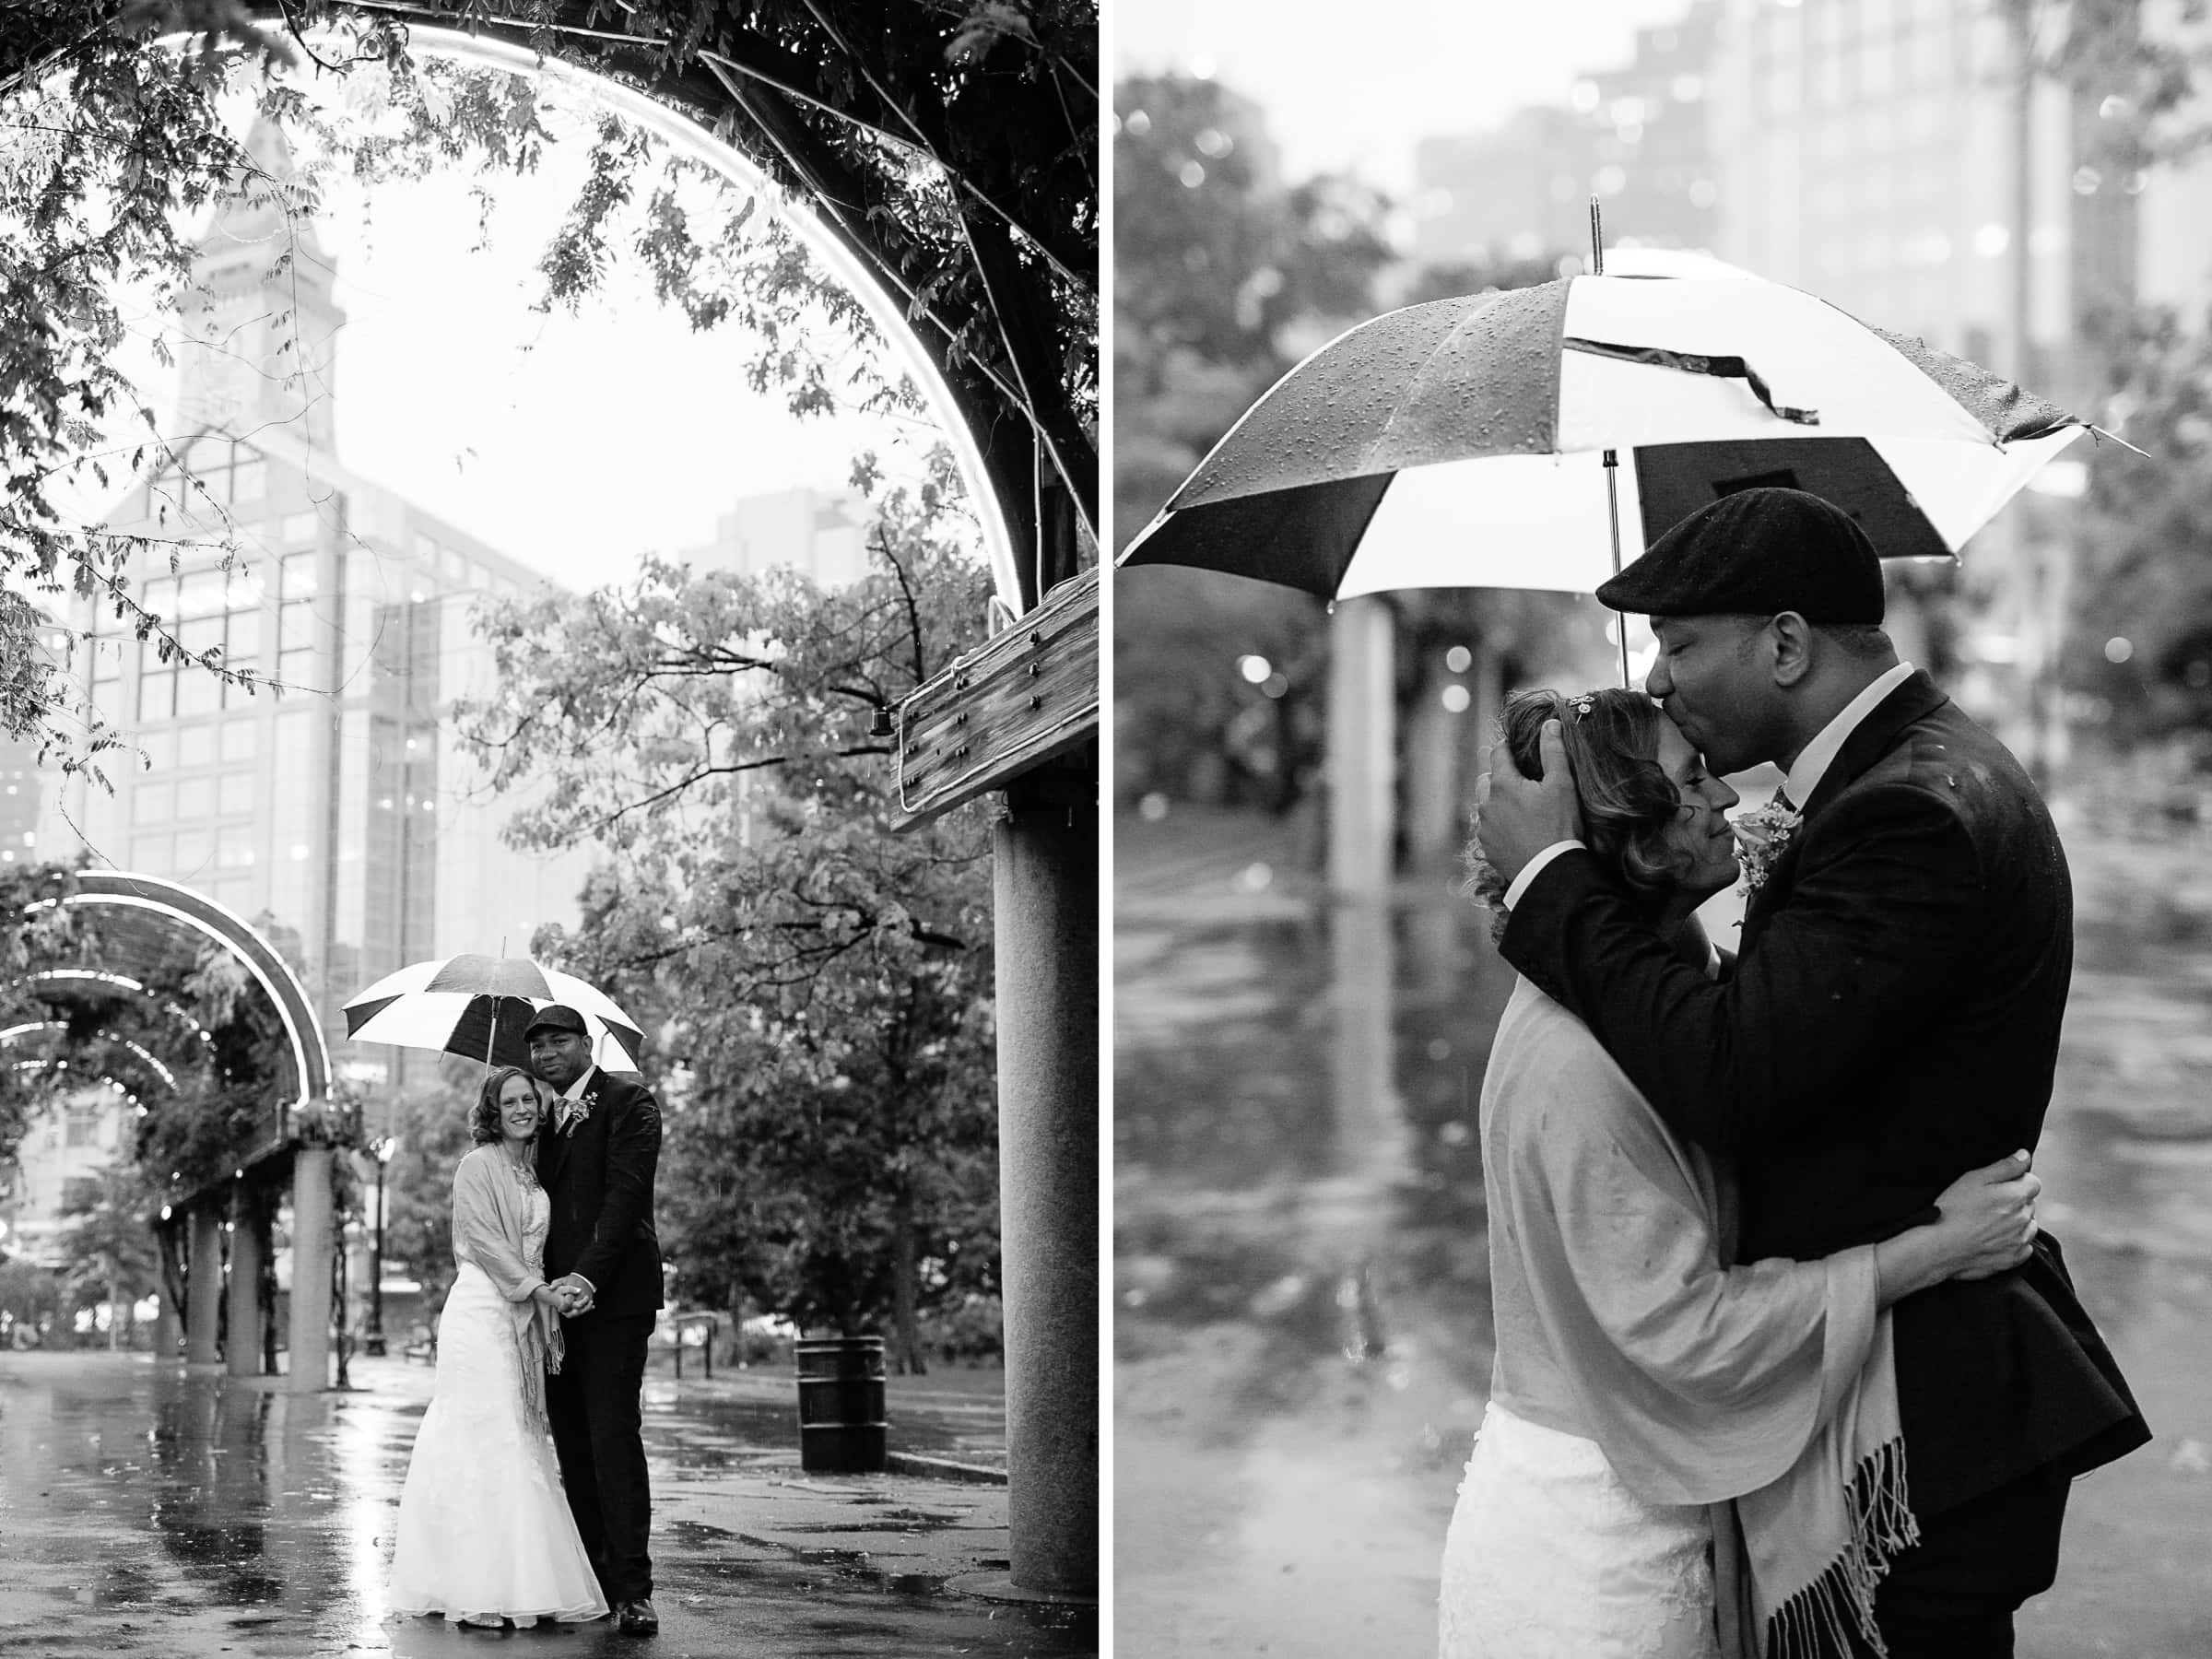 Rainy wedding photos in Christopher Columbus Park | Kelly Benvenuto Photography | Boston Wedding Photographer